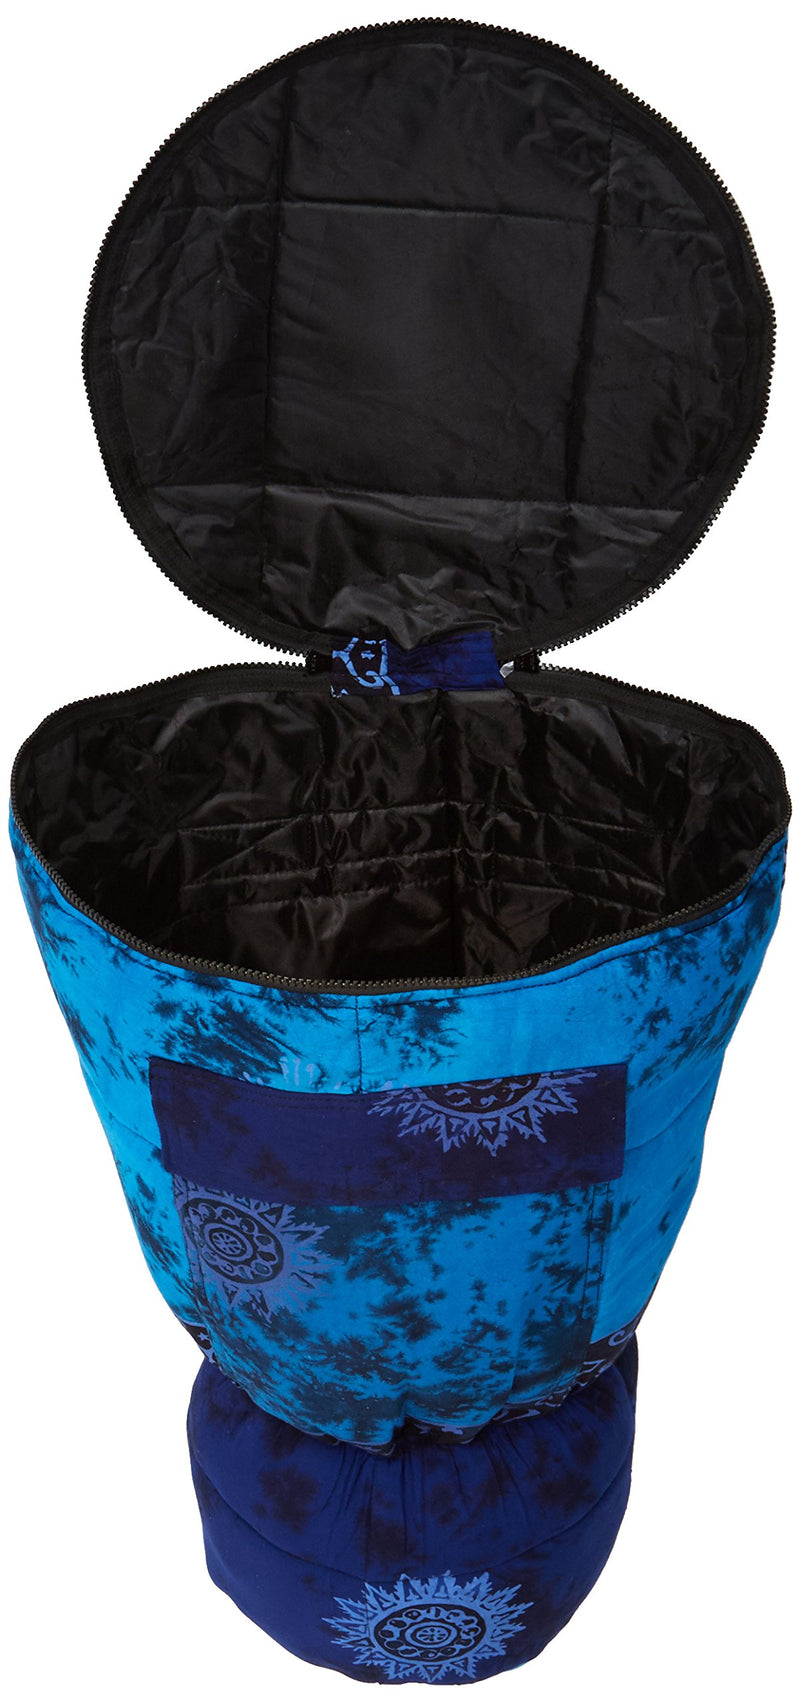 X8 Drums X8-BG-BLUE-L Djembe Backpack Bag with Blue Celestial Design, Large